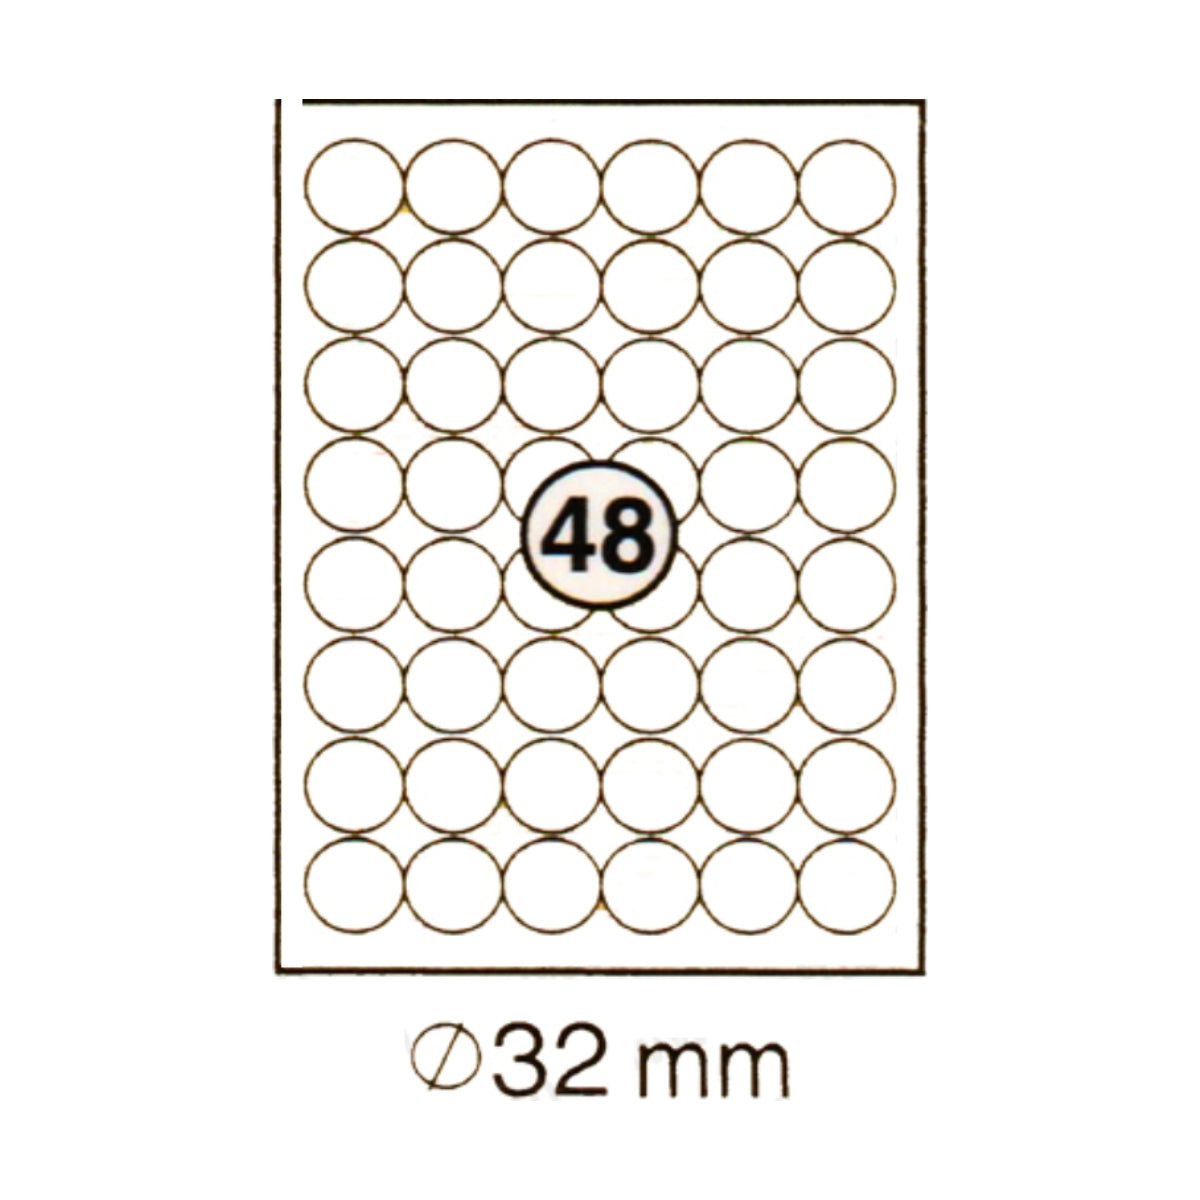 xel-lent  48 labels/sheet, round, diameter 32mm, 100sheets/pack, White